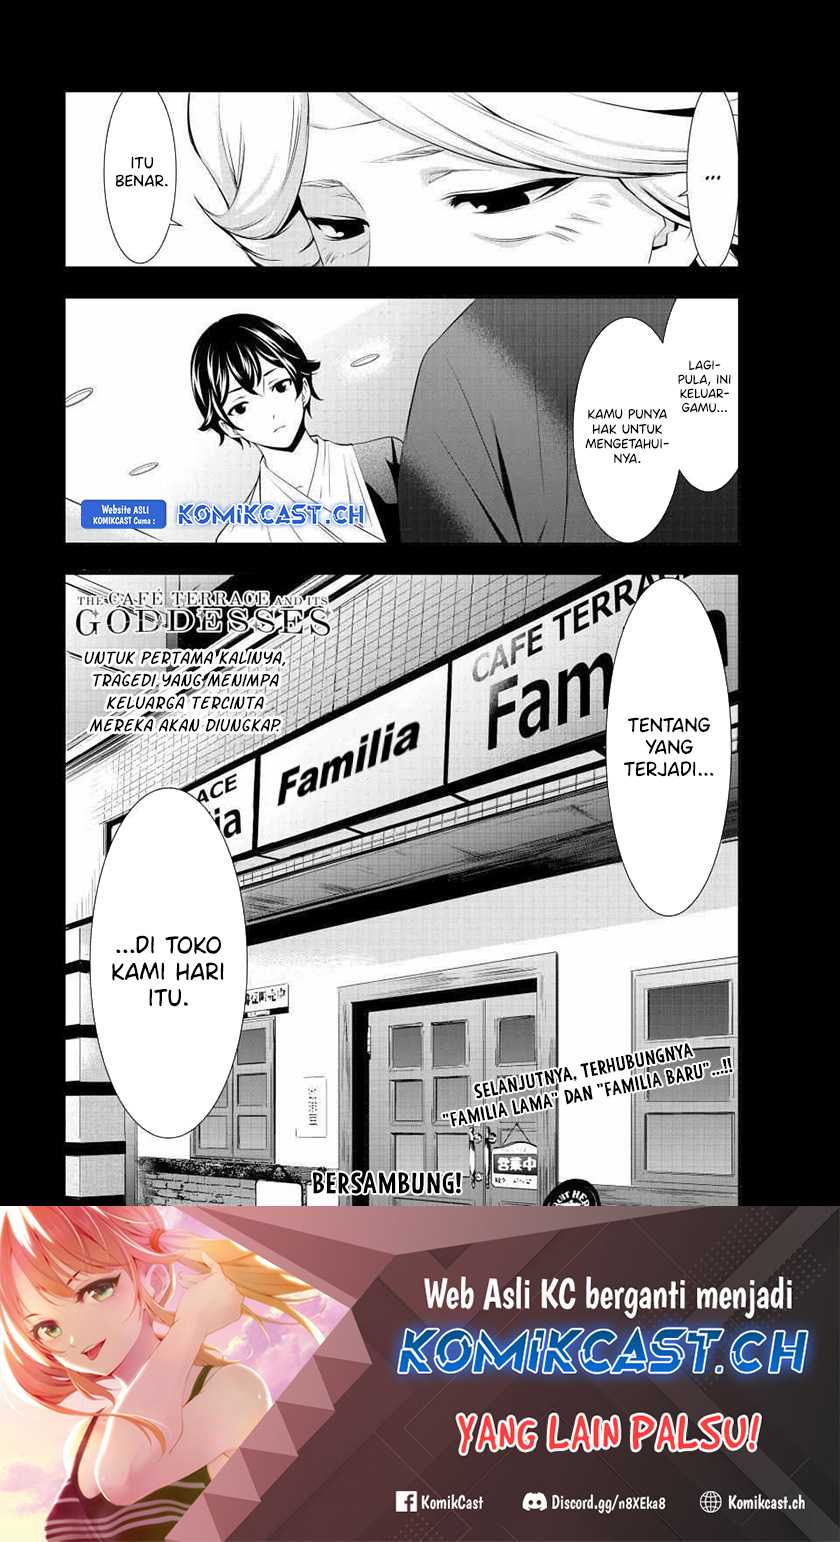 Megami no Kafeterasu (Goddess Café Terrace) Chapter 121